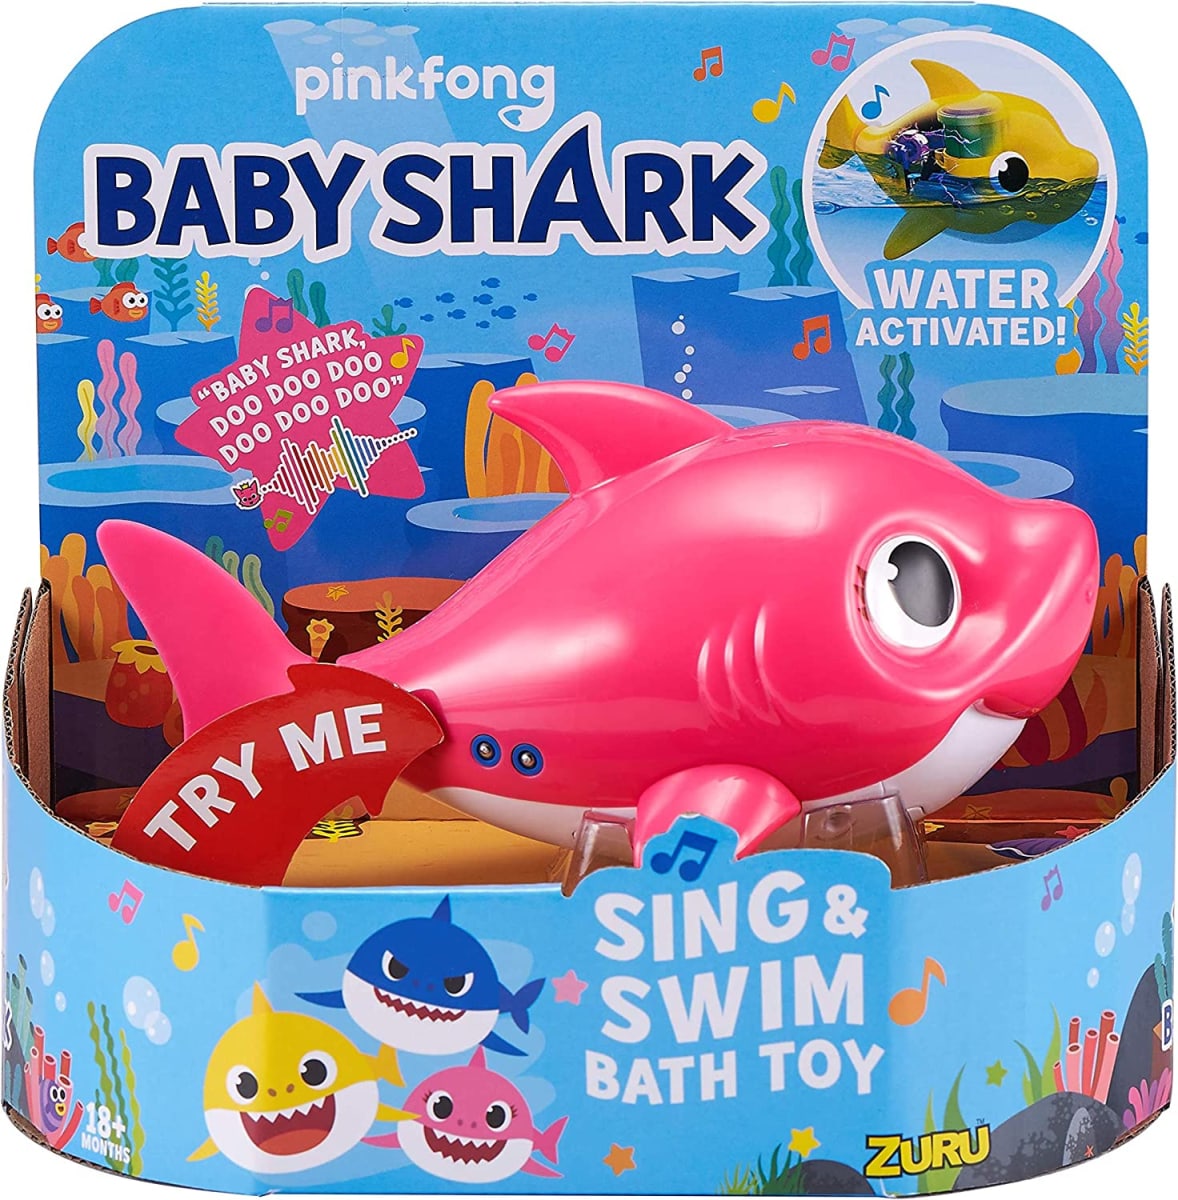 Baby Shark Battery-Powered Sing and Swim Bath Toy by ZURU - Mommy Shark (Pink) (Custom Packaging)